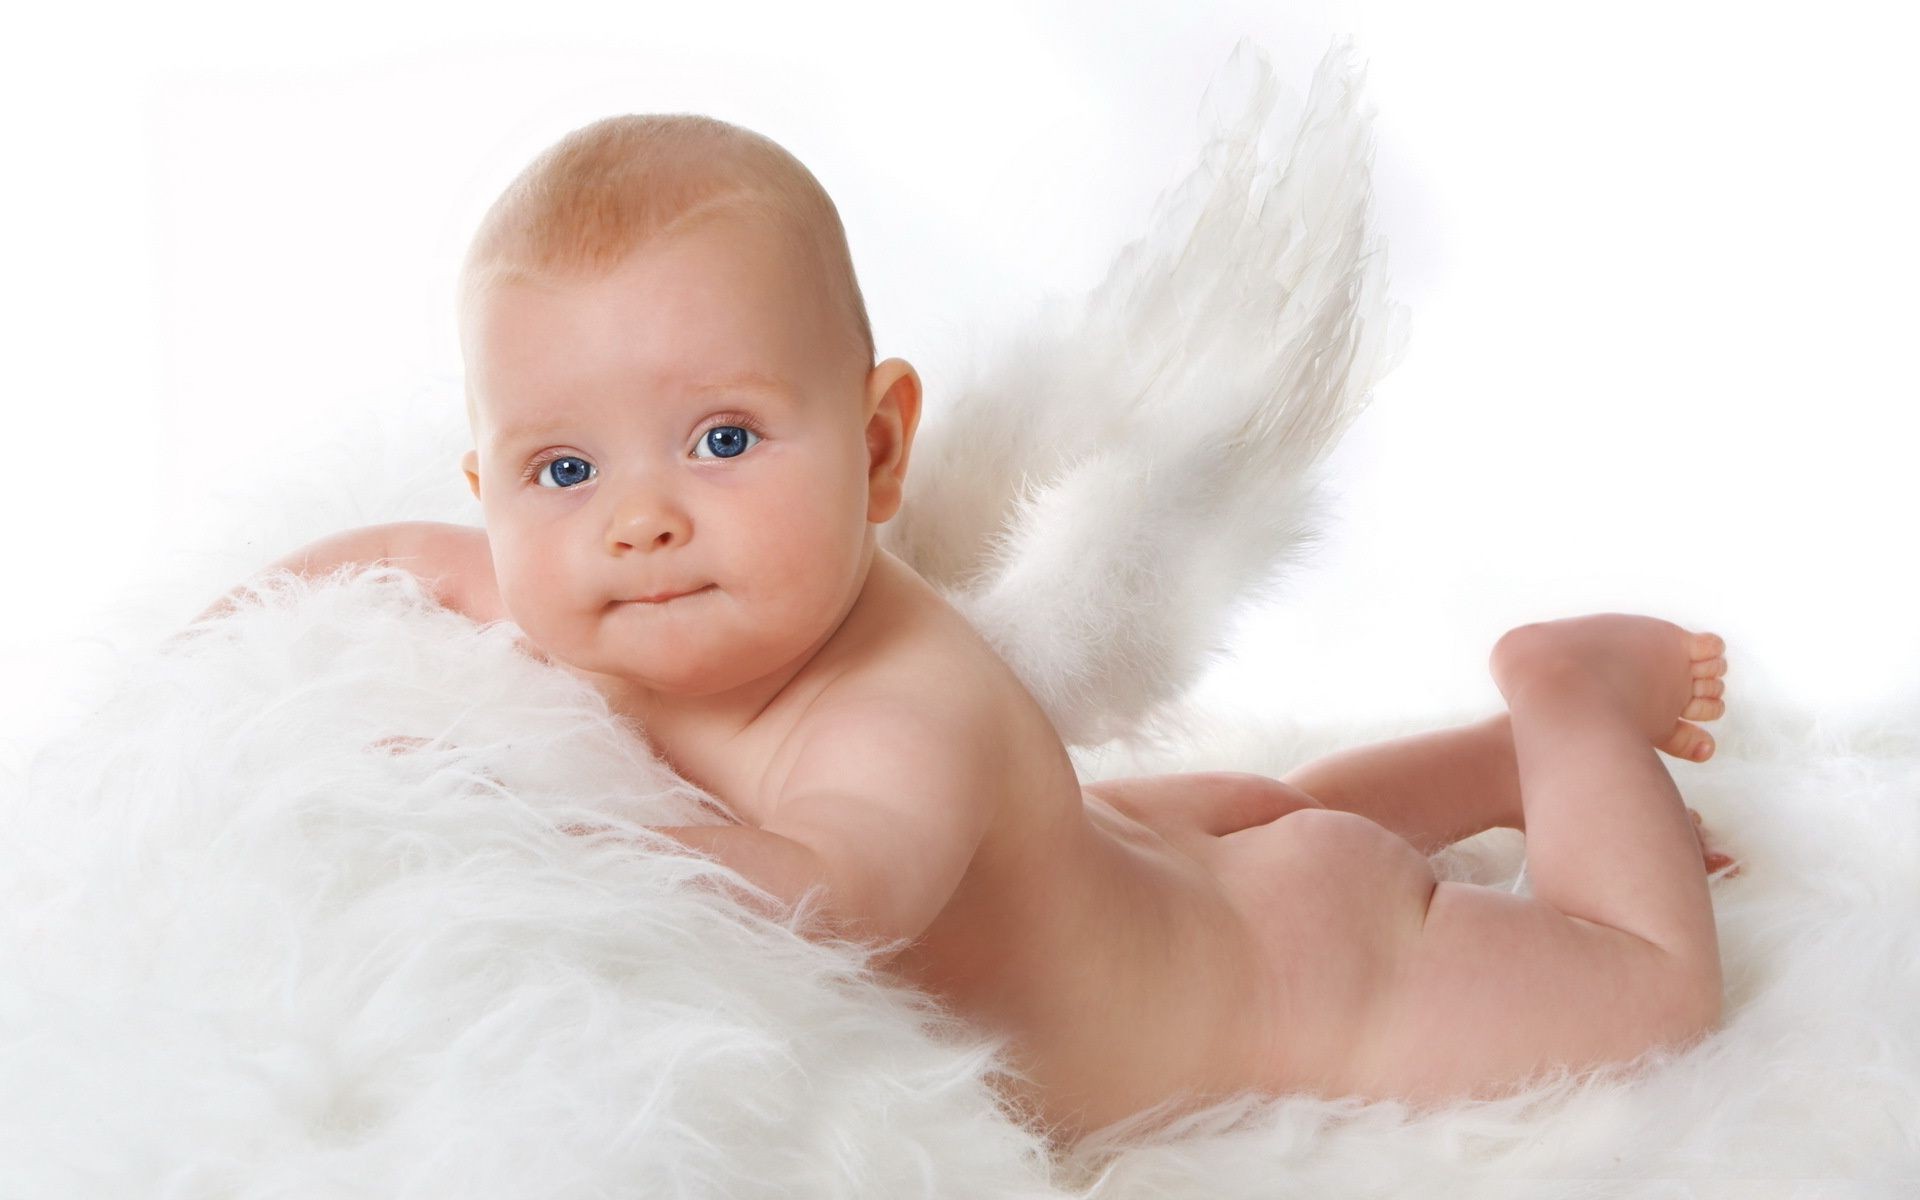 angels child baby innocence little cute nude precious fun newborn